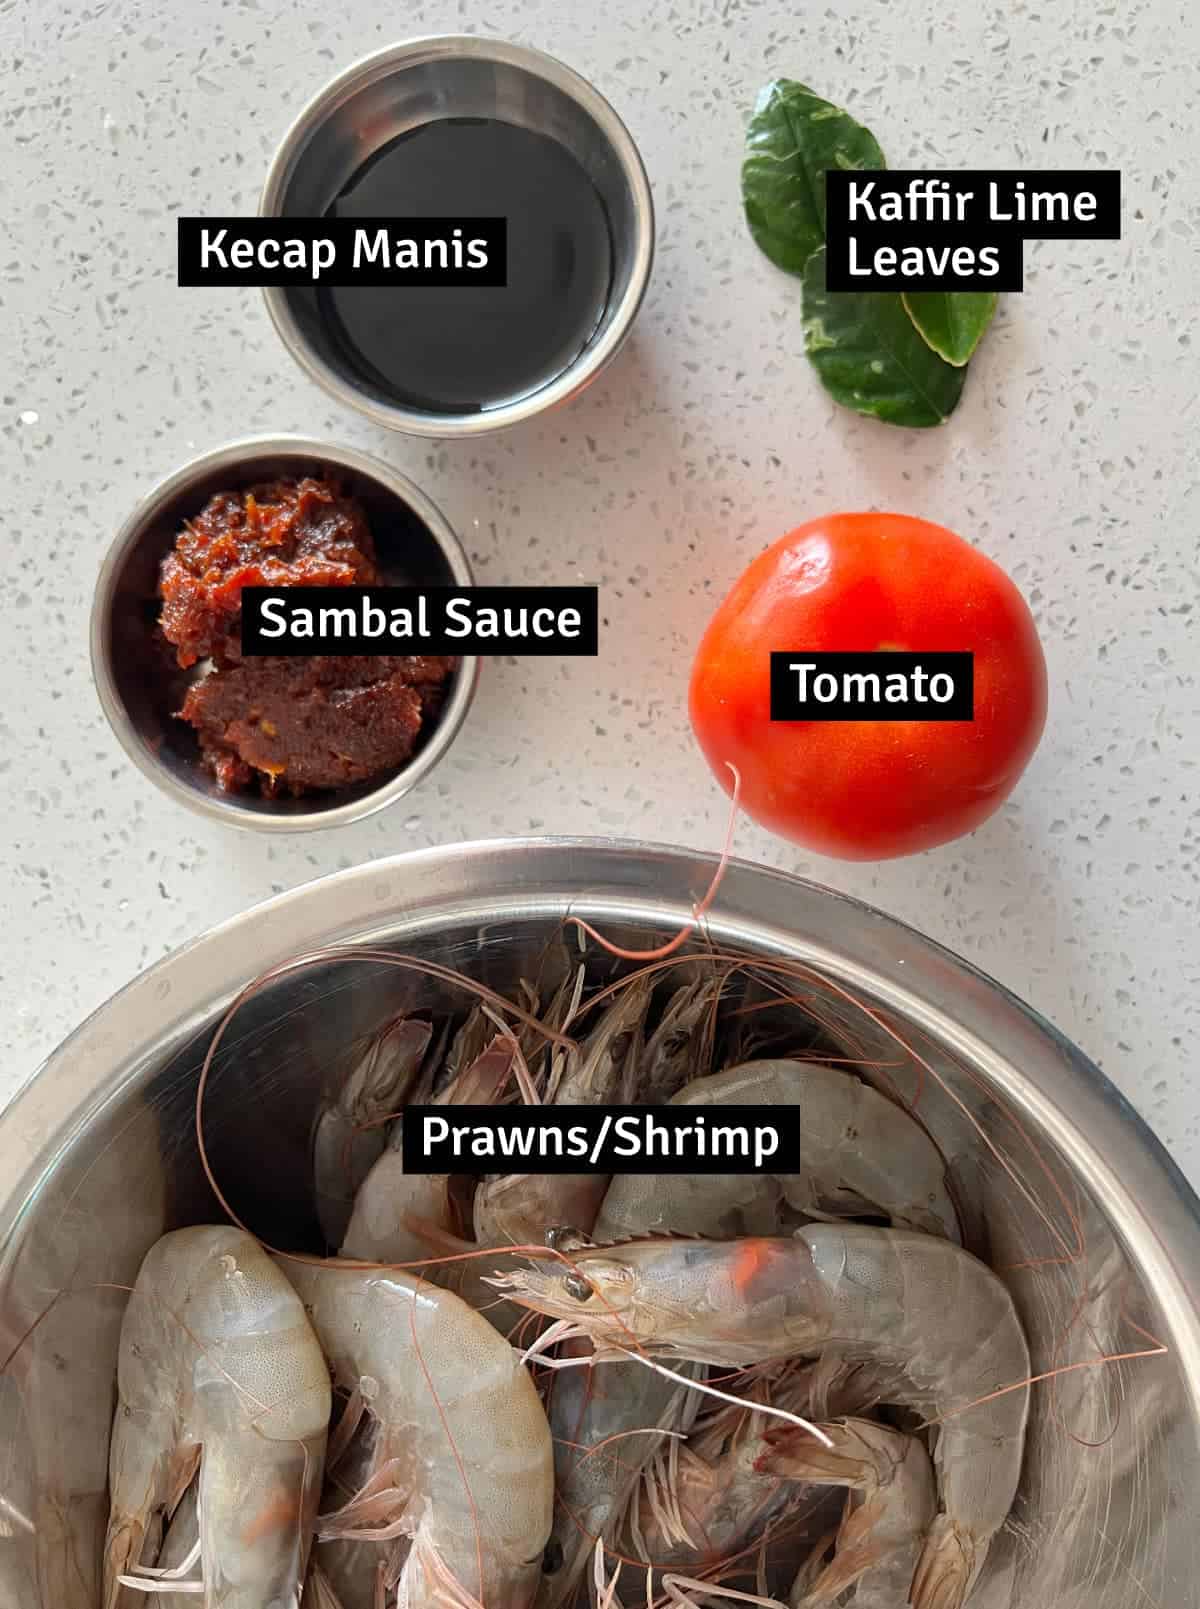 The Ingredients for Sambal Udang: Sambal Sauce, Prawns, tomato, lime leaves and keycap manis.